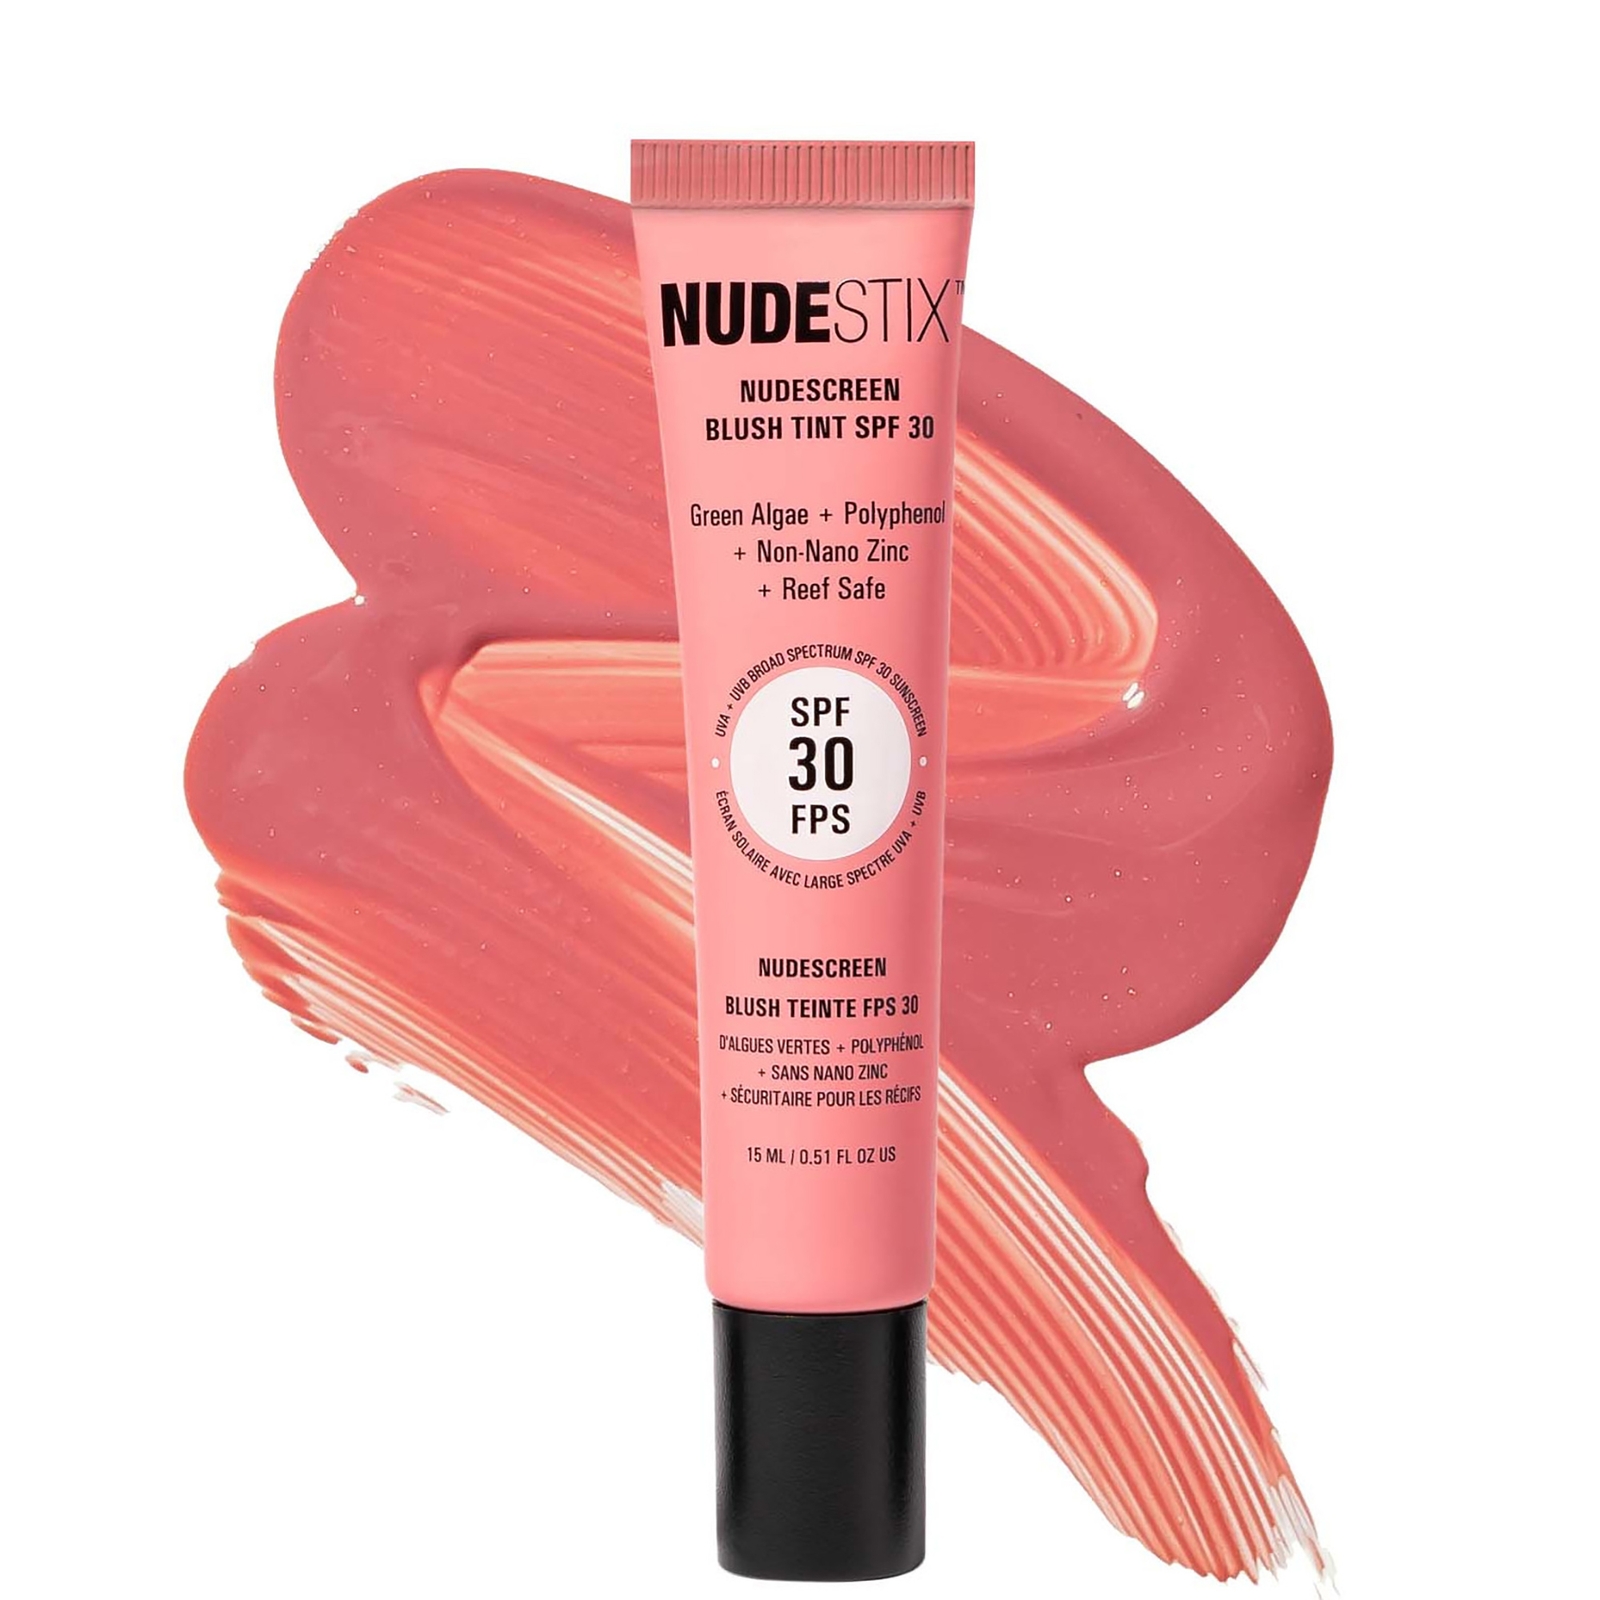 Nudestix Nudescreen Blush Tint Spf 30 15ml (various Shades) - Sunny Sweet Cheeks